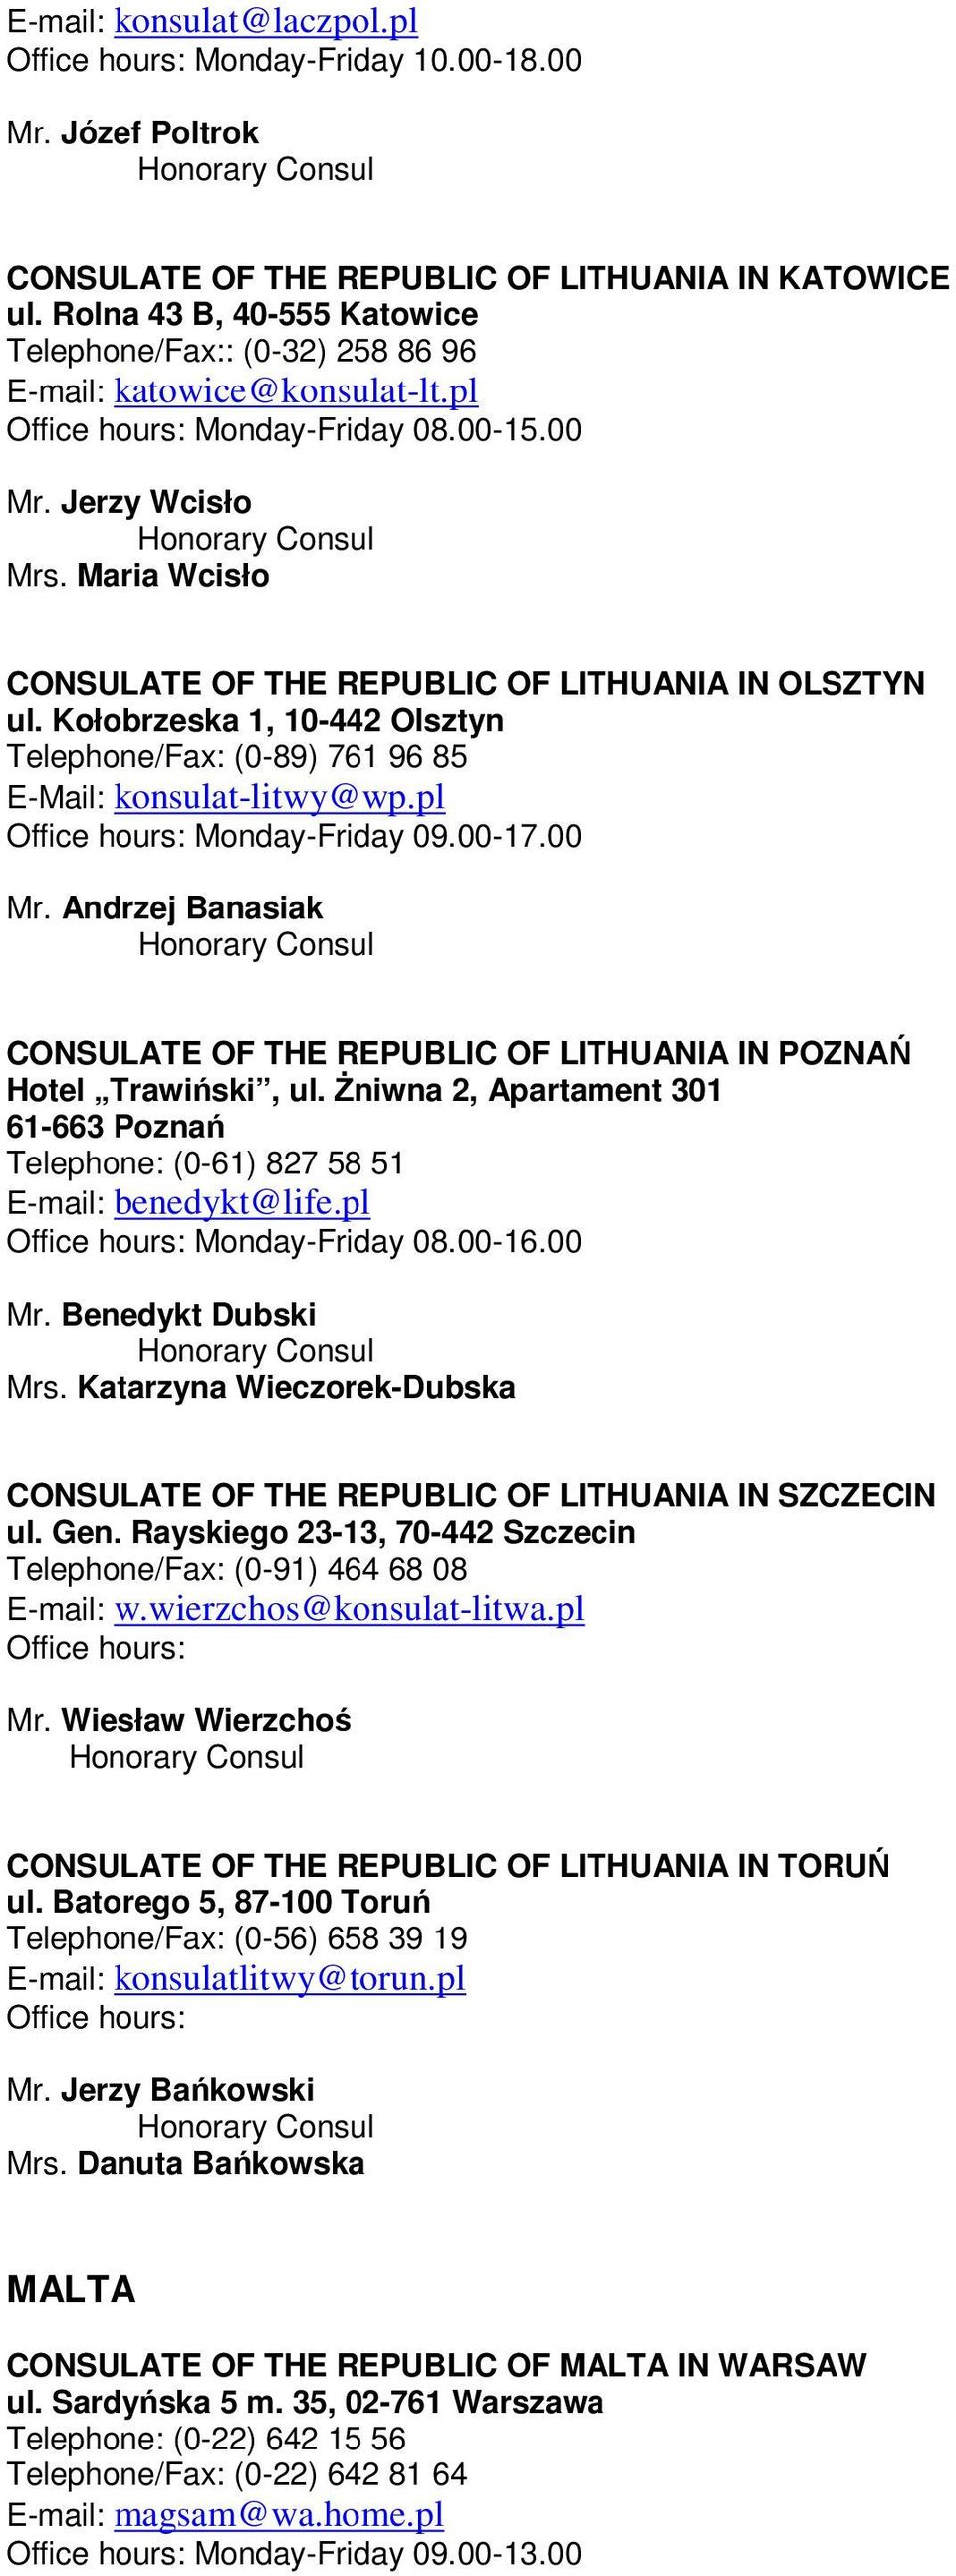 Maria Wcisło CONSULATE OF THE REPUBLIC OF LITHUANIA IN OLSZTYN ul. Kołobrzeska 1, 10-442 Olsztyn Telephone/Fax: (0-89) 761 96 85 E-Mail: konsulat-litwy@wp.pl Office hours: Monday-Friday 09.00-17.